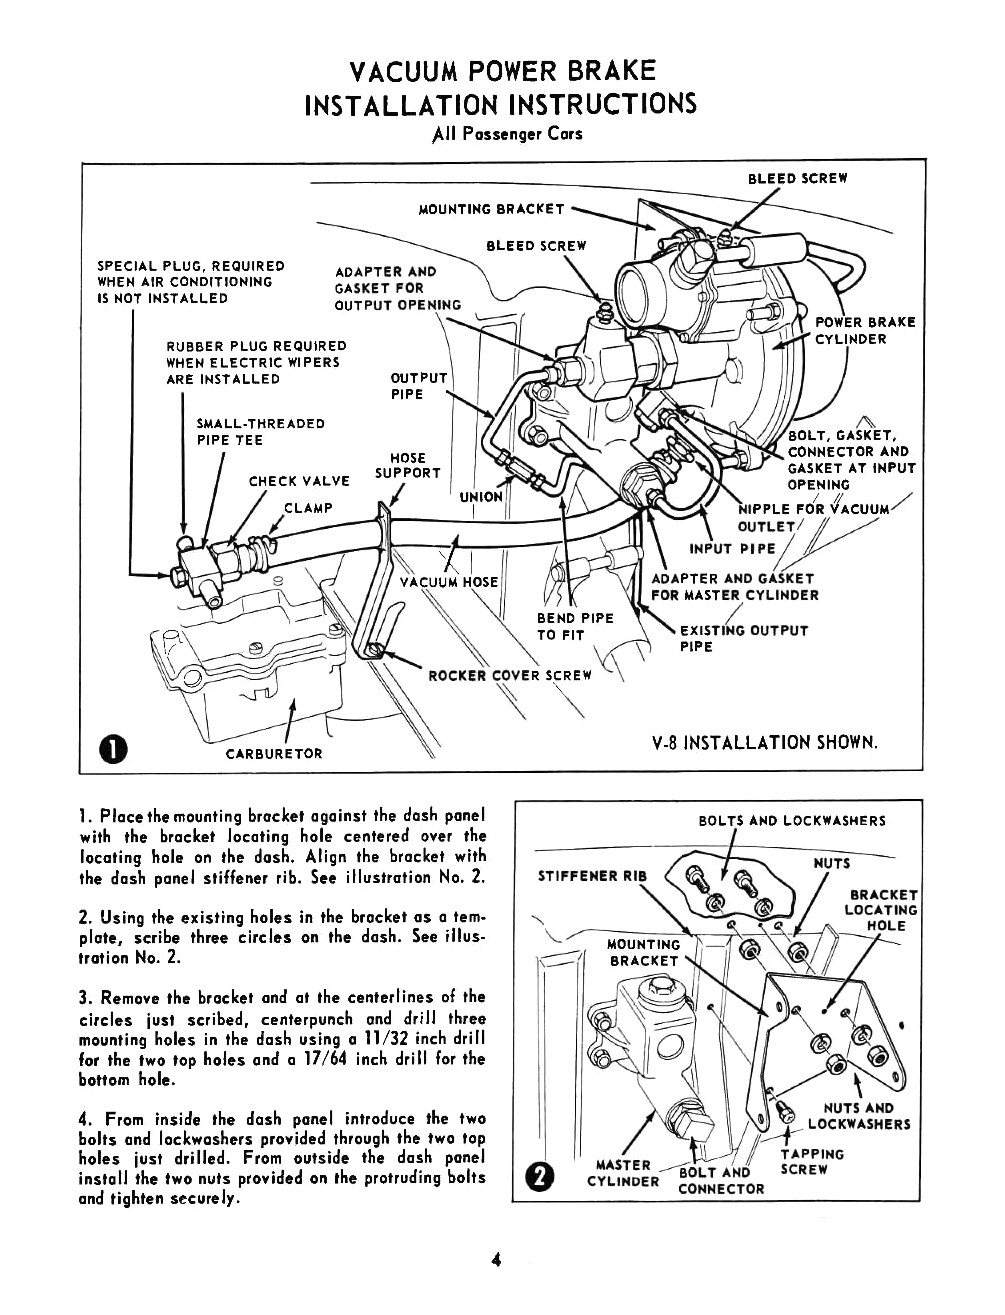 1955_Chevrolet_Acc_Manual-04